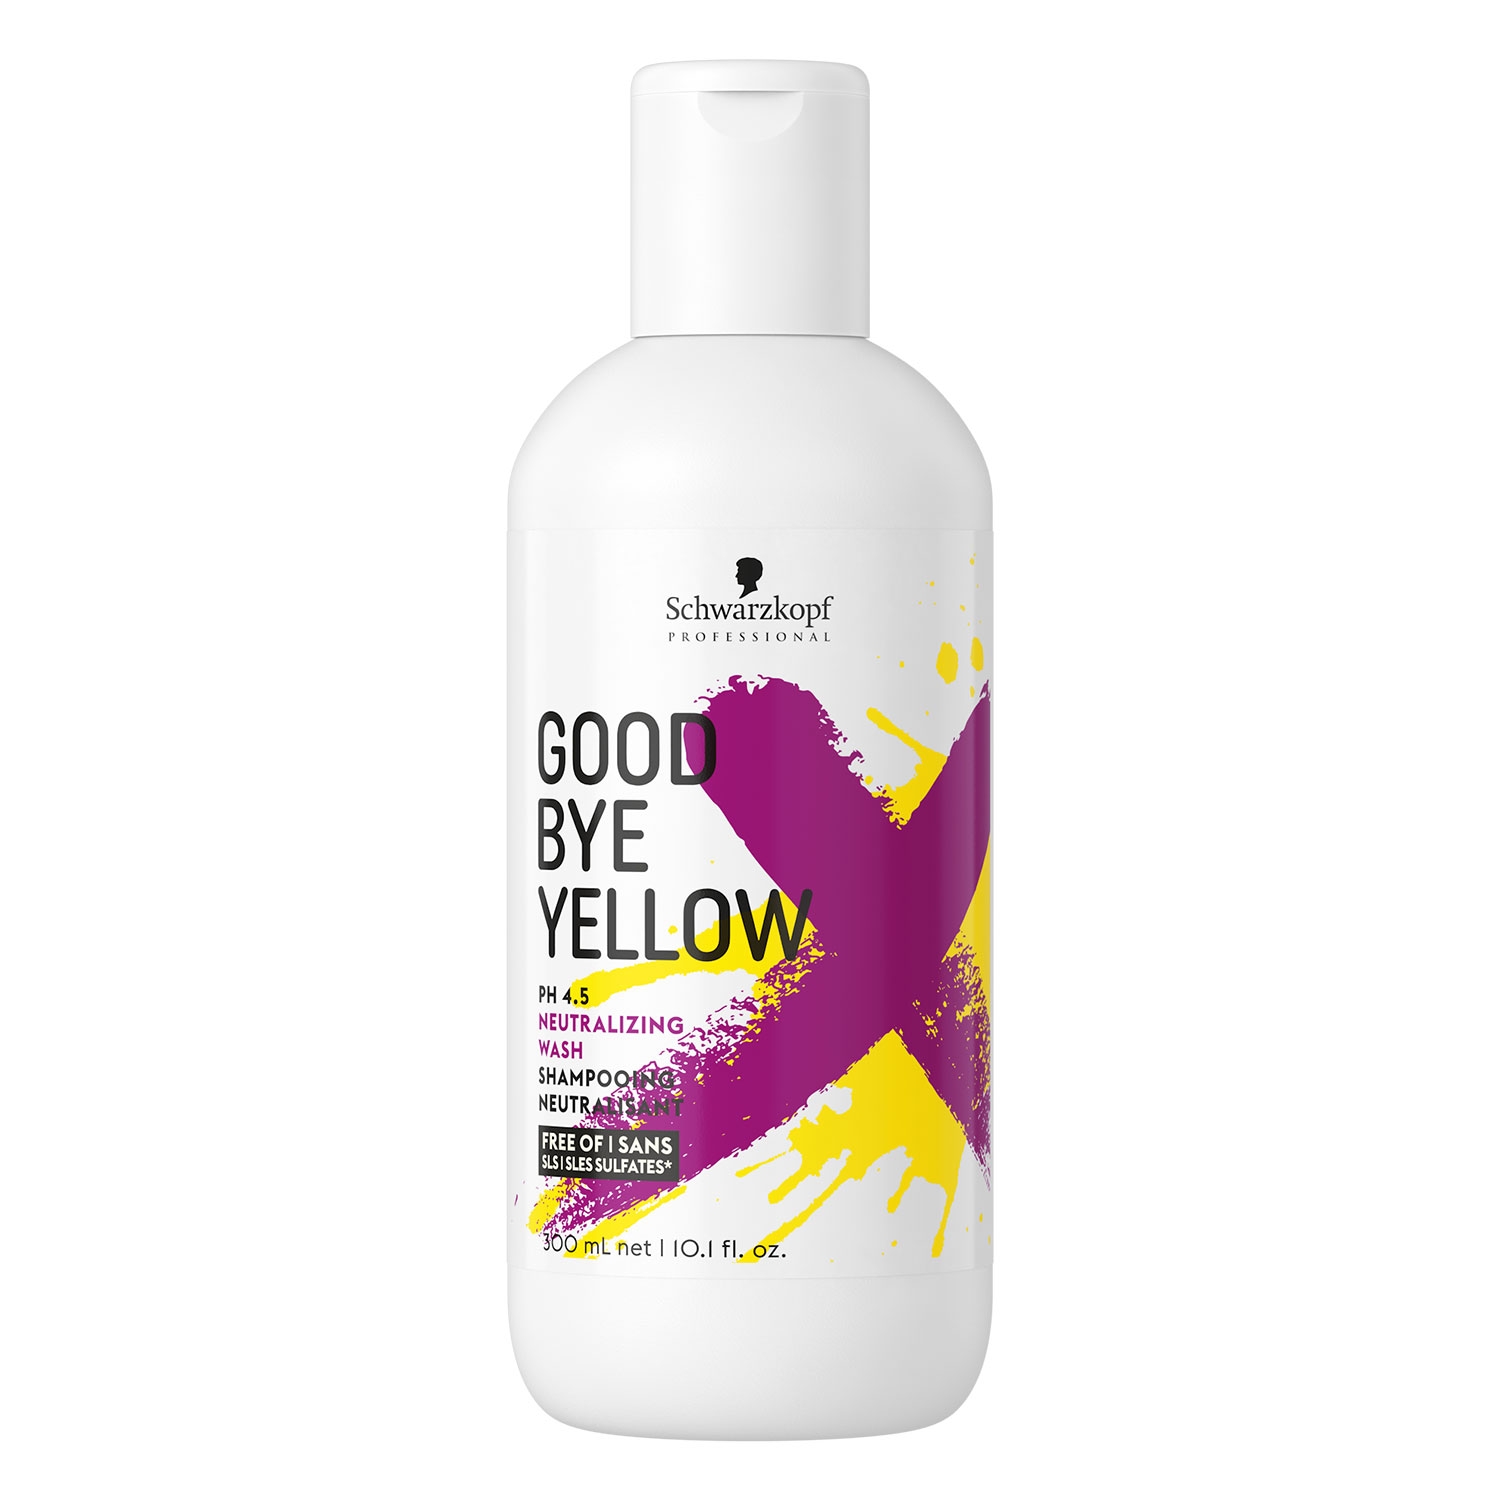 Produktbild von Goodbye - Yellow Shampoo